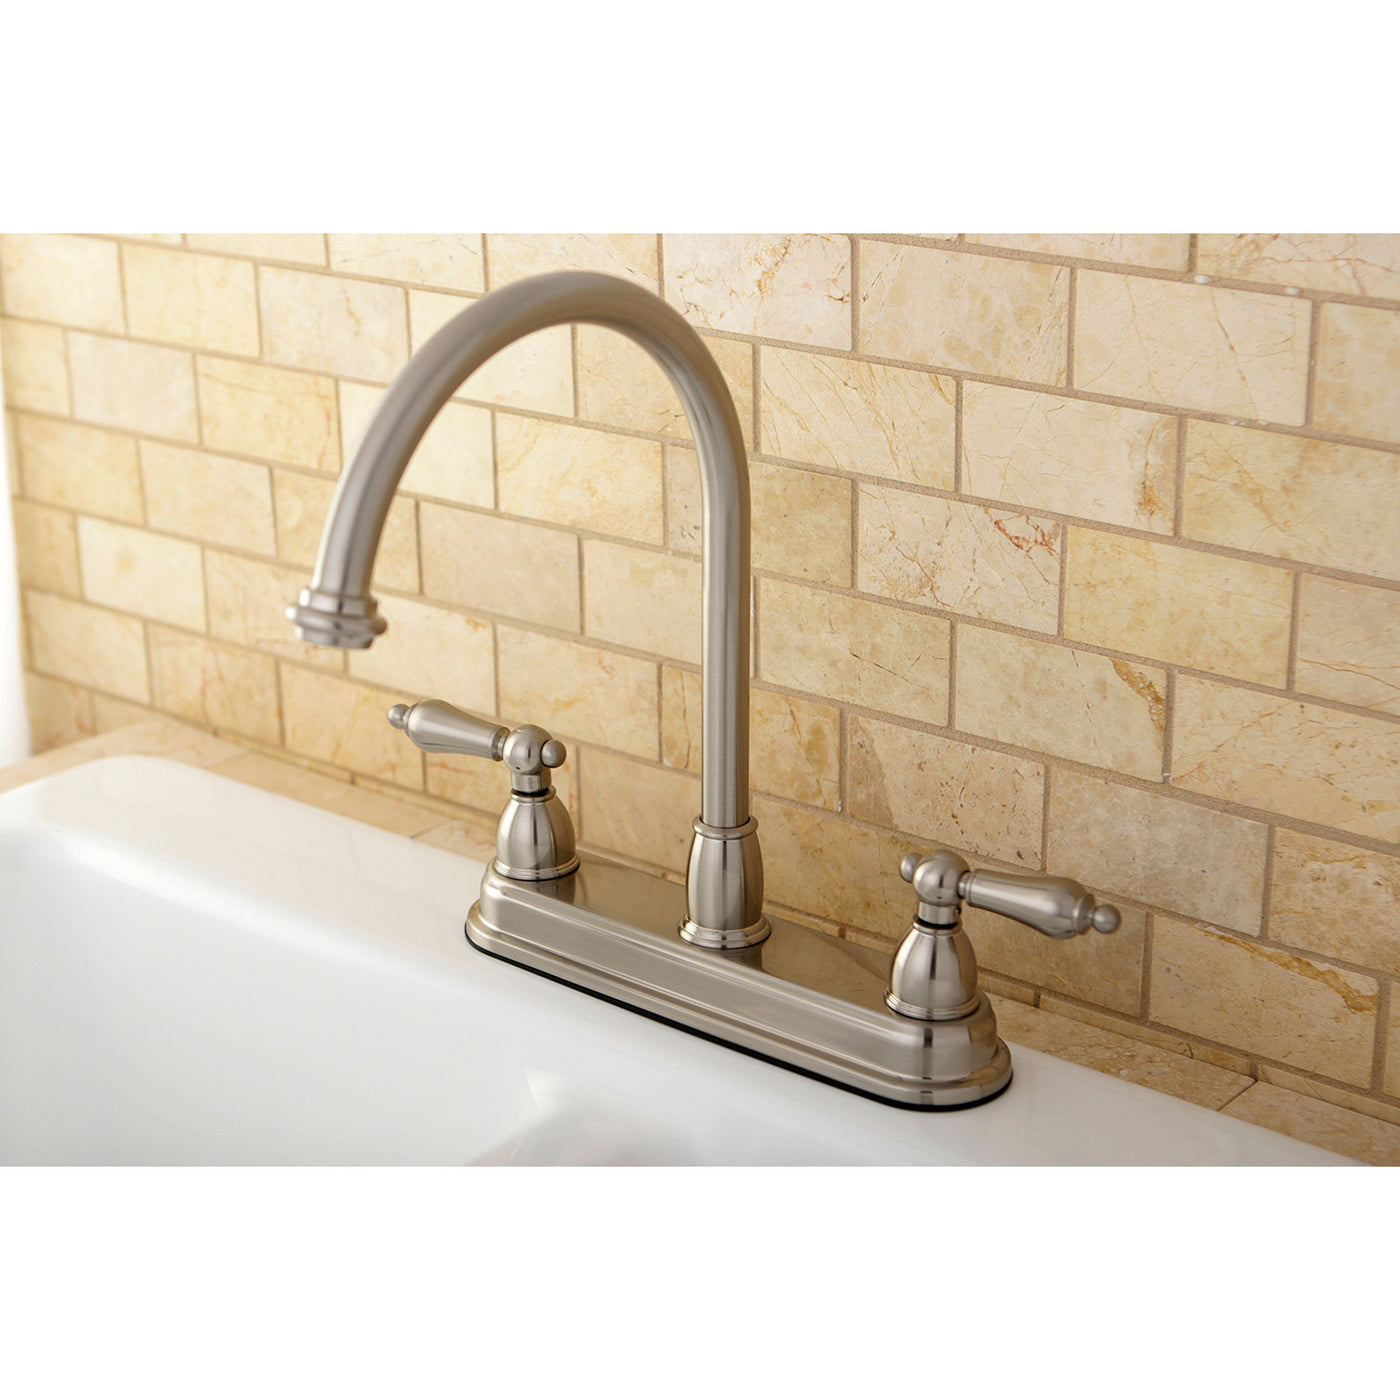 Elements of Design EB3748AL Centerset Kitchen Faucet, Brushed Nickel